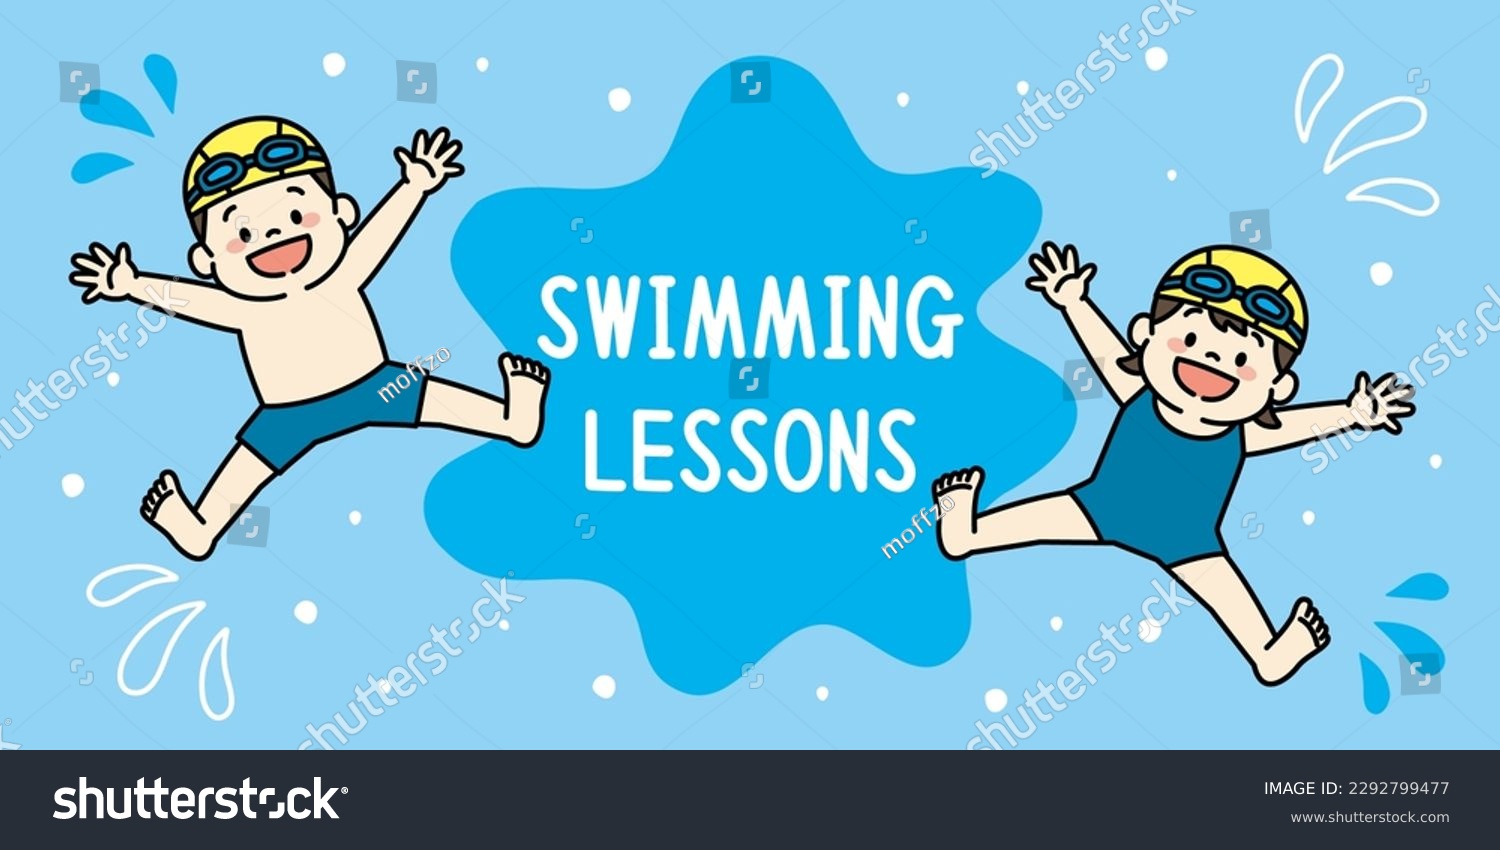 Web Banner Illustration of Swimming Lessons for Kids #2292799477